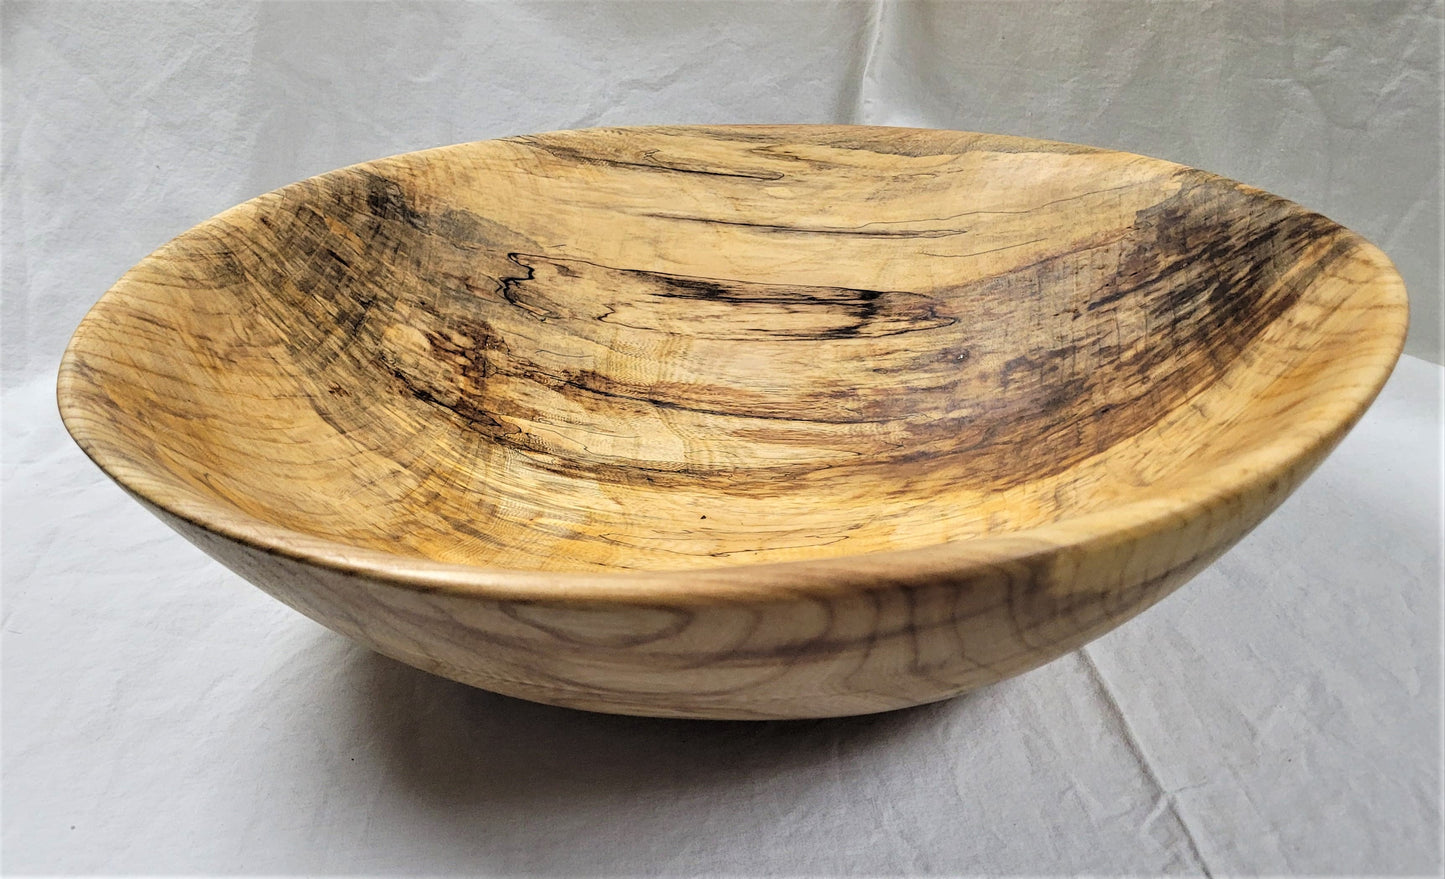 Carved Wood Bowl, medium